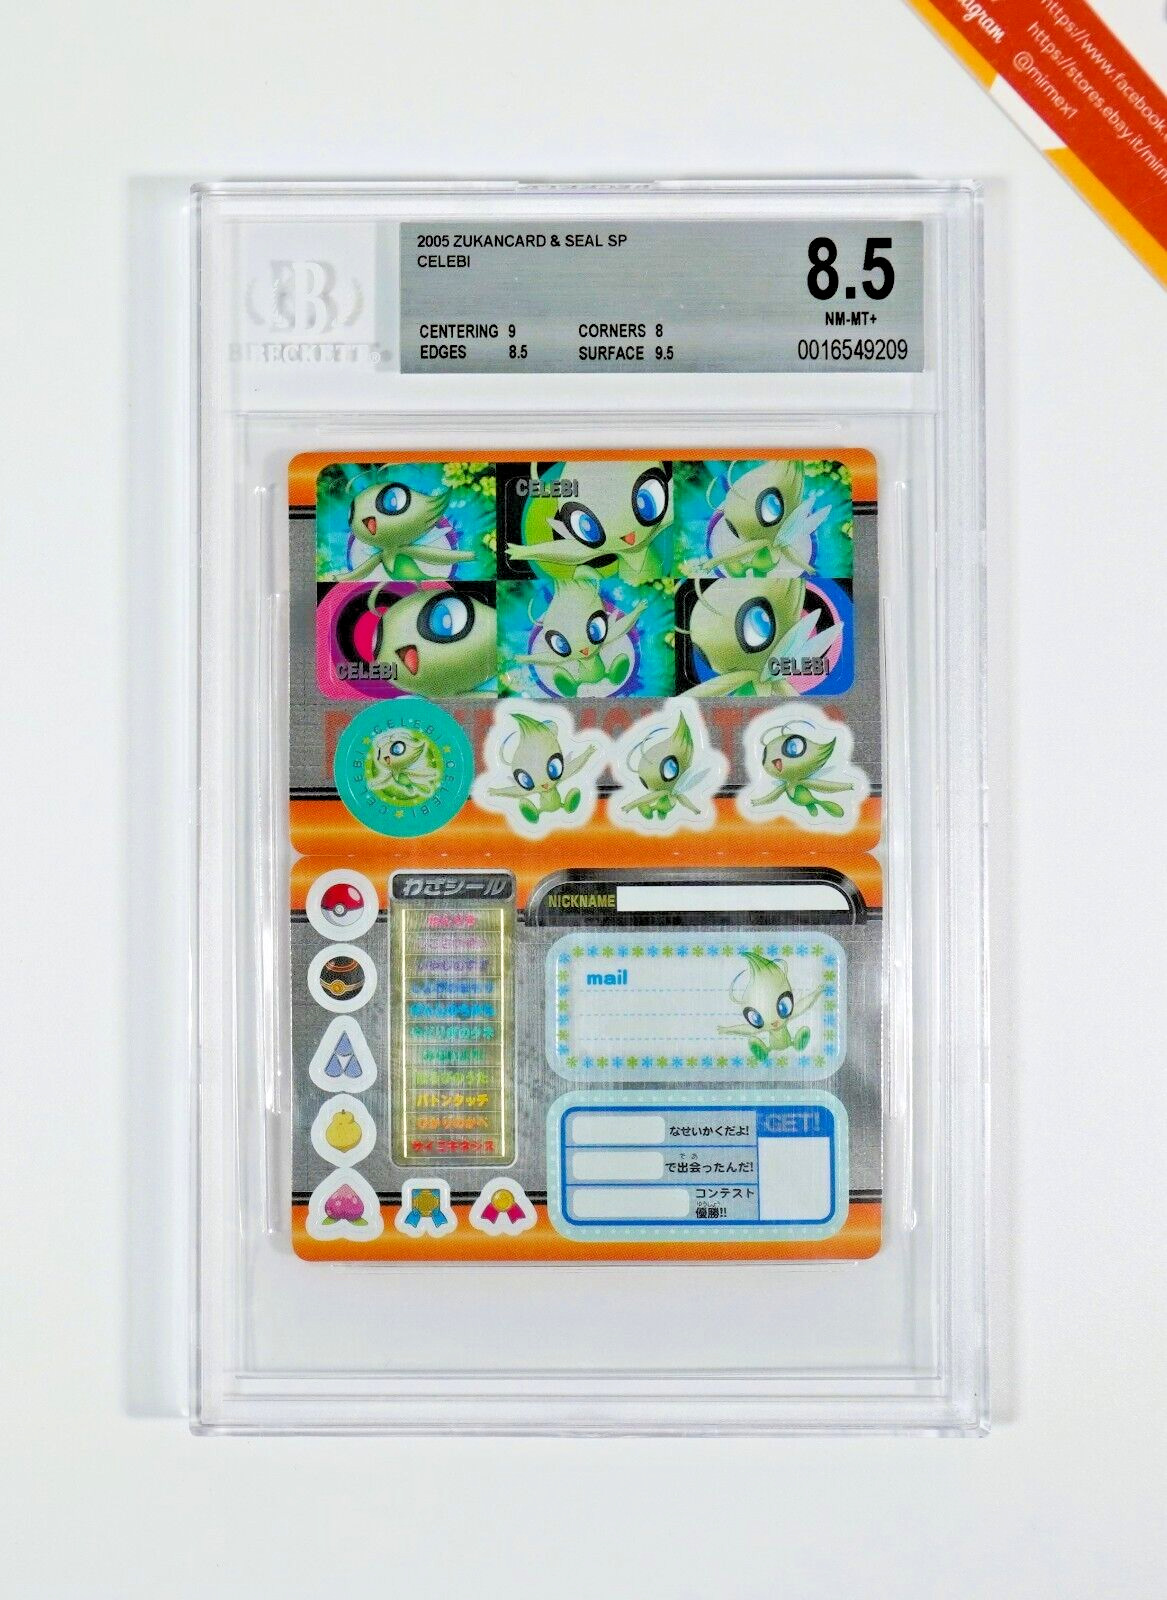 Pokemon BGS 8.5 Celebi Zukan Card & Seal SP 2005 Japanese